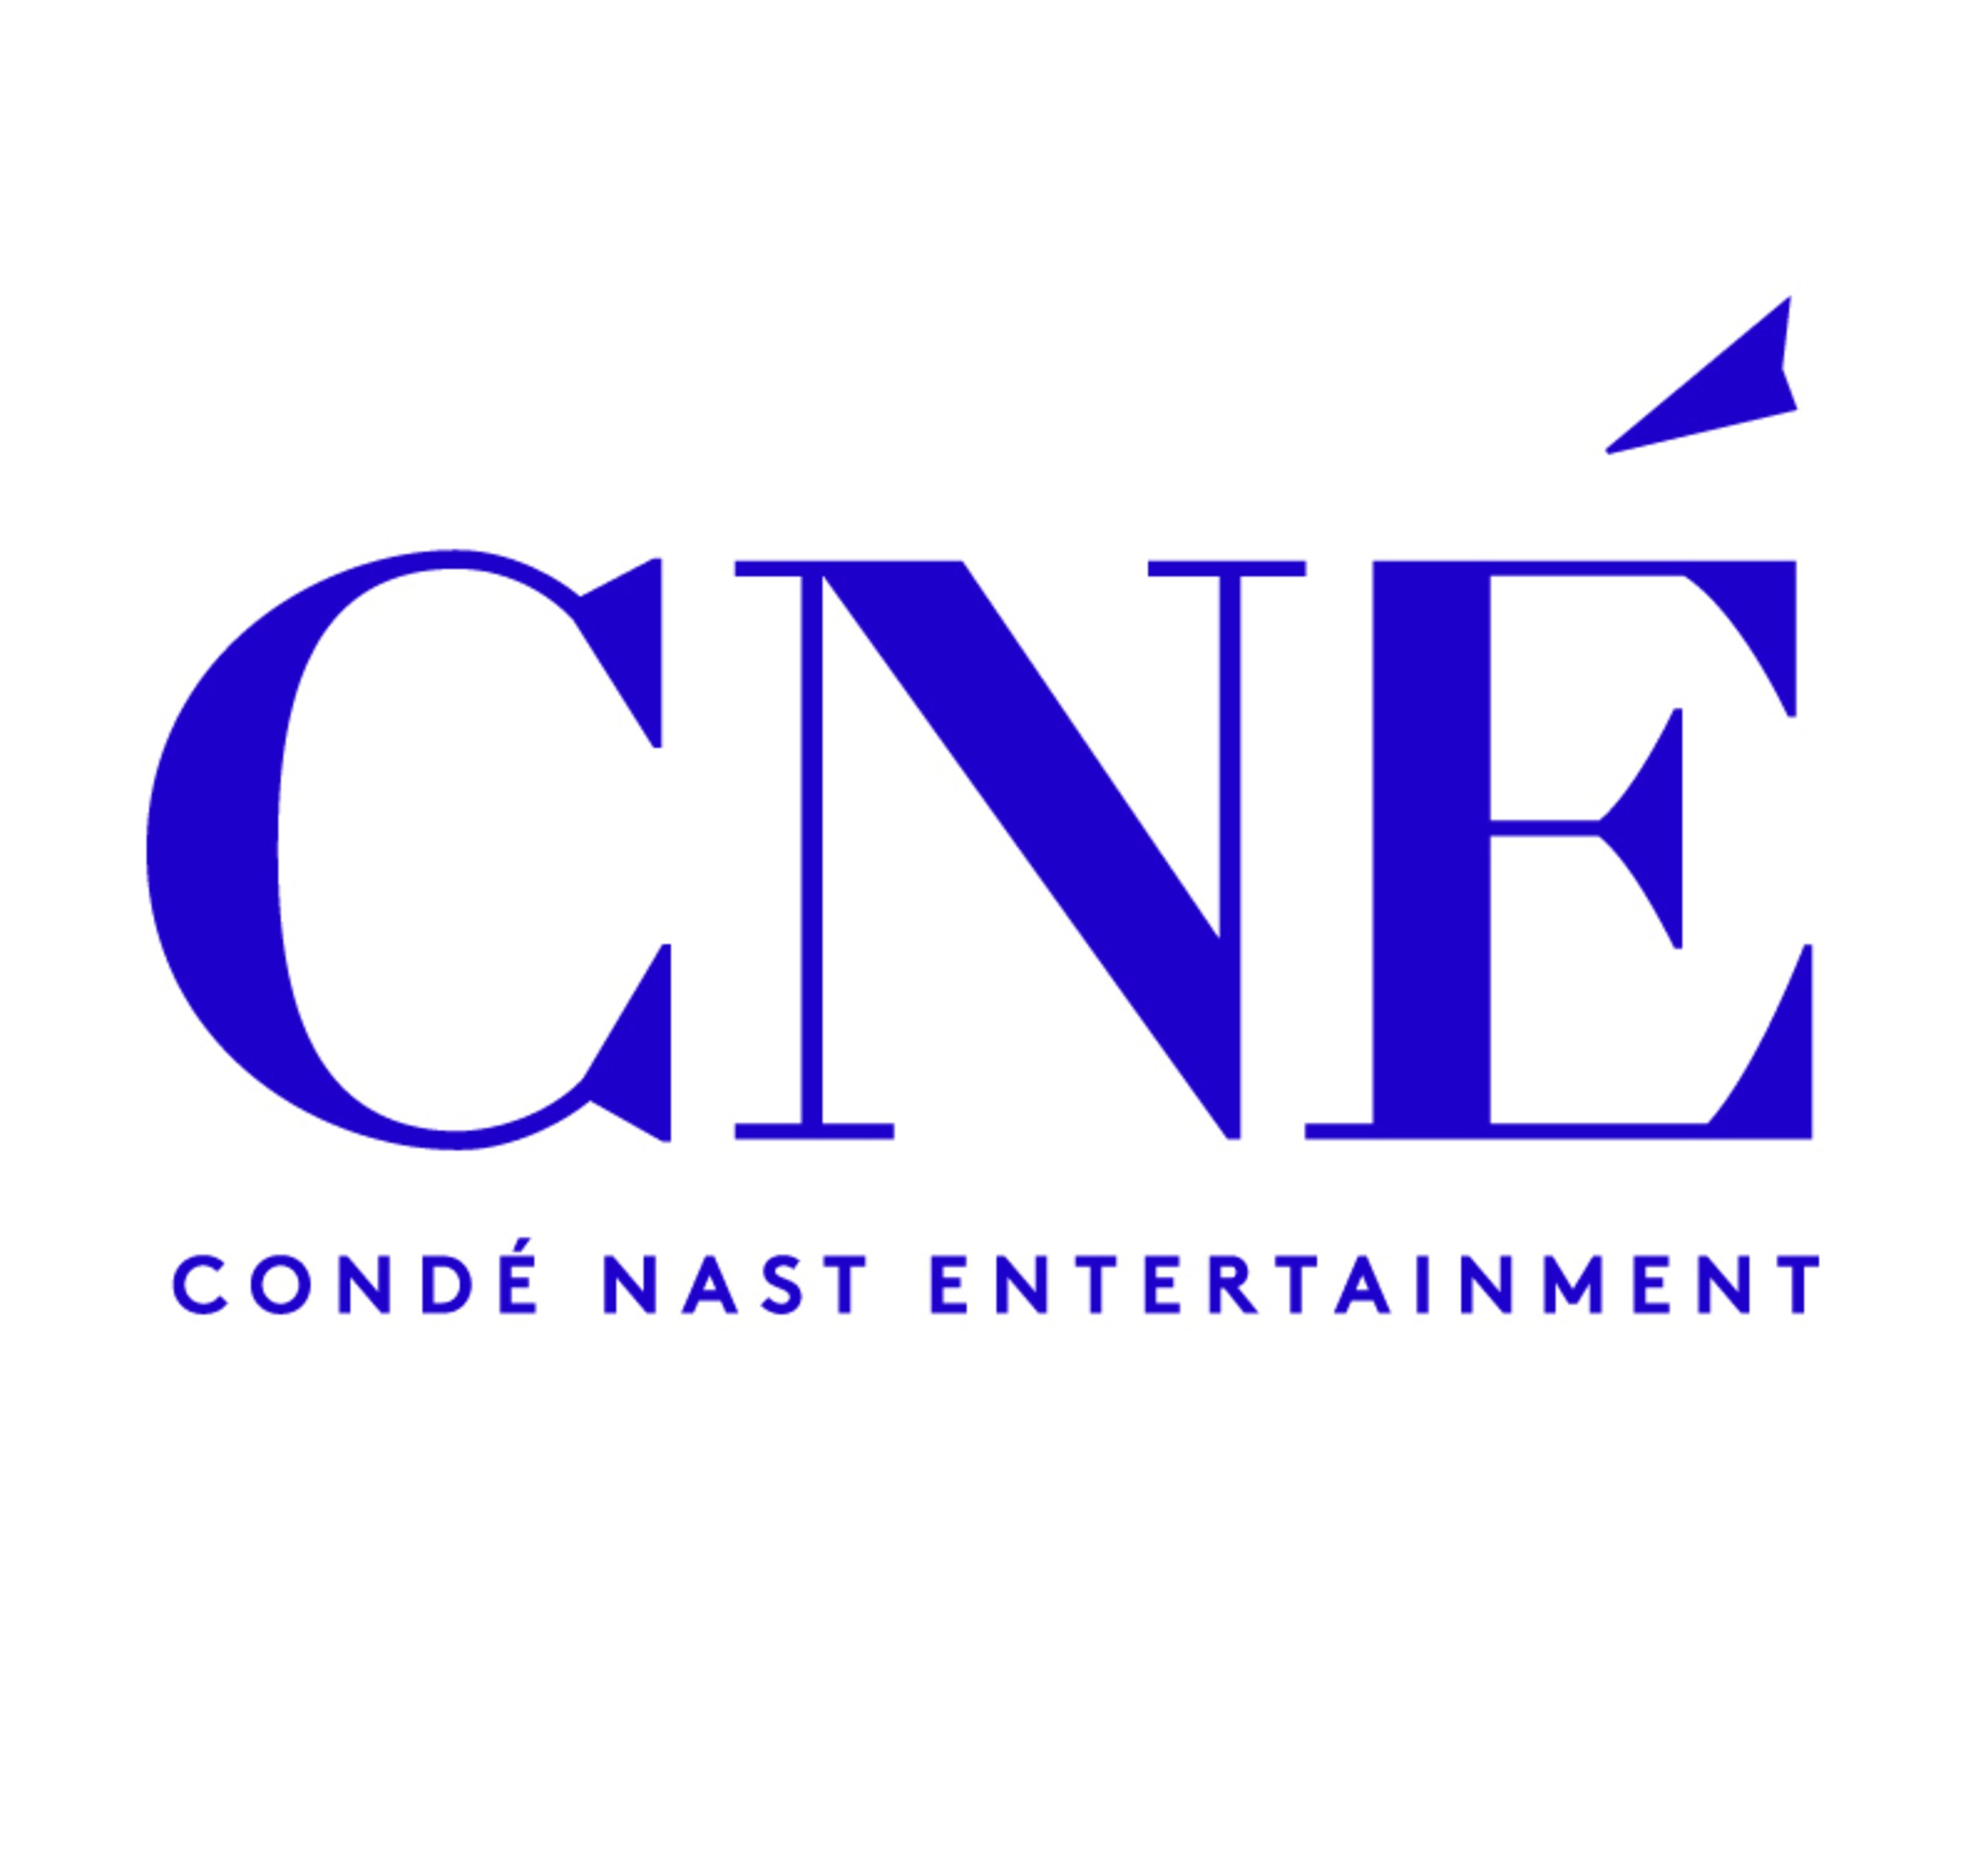 Conde Nast Entertainment logo (PRNewsFoto/Conde Nast Entertainment )